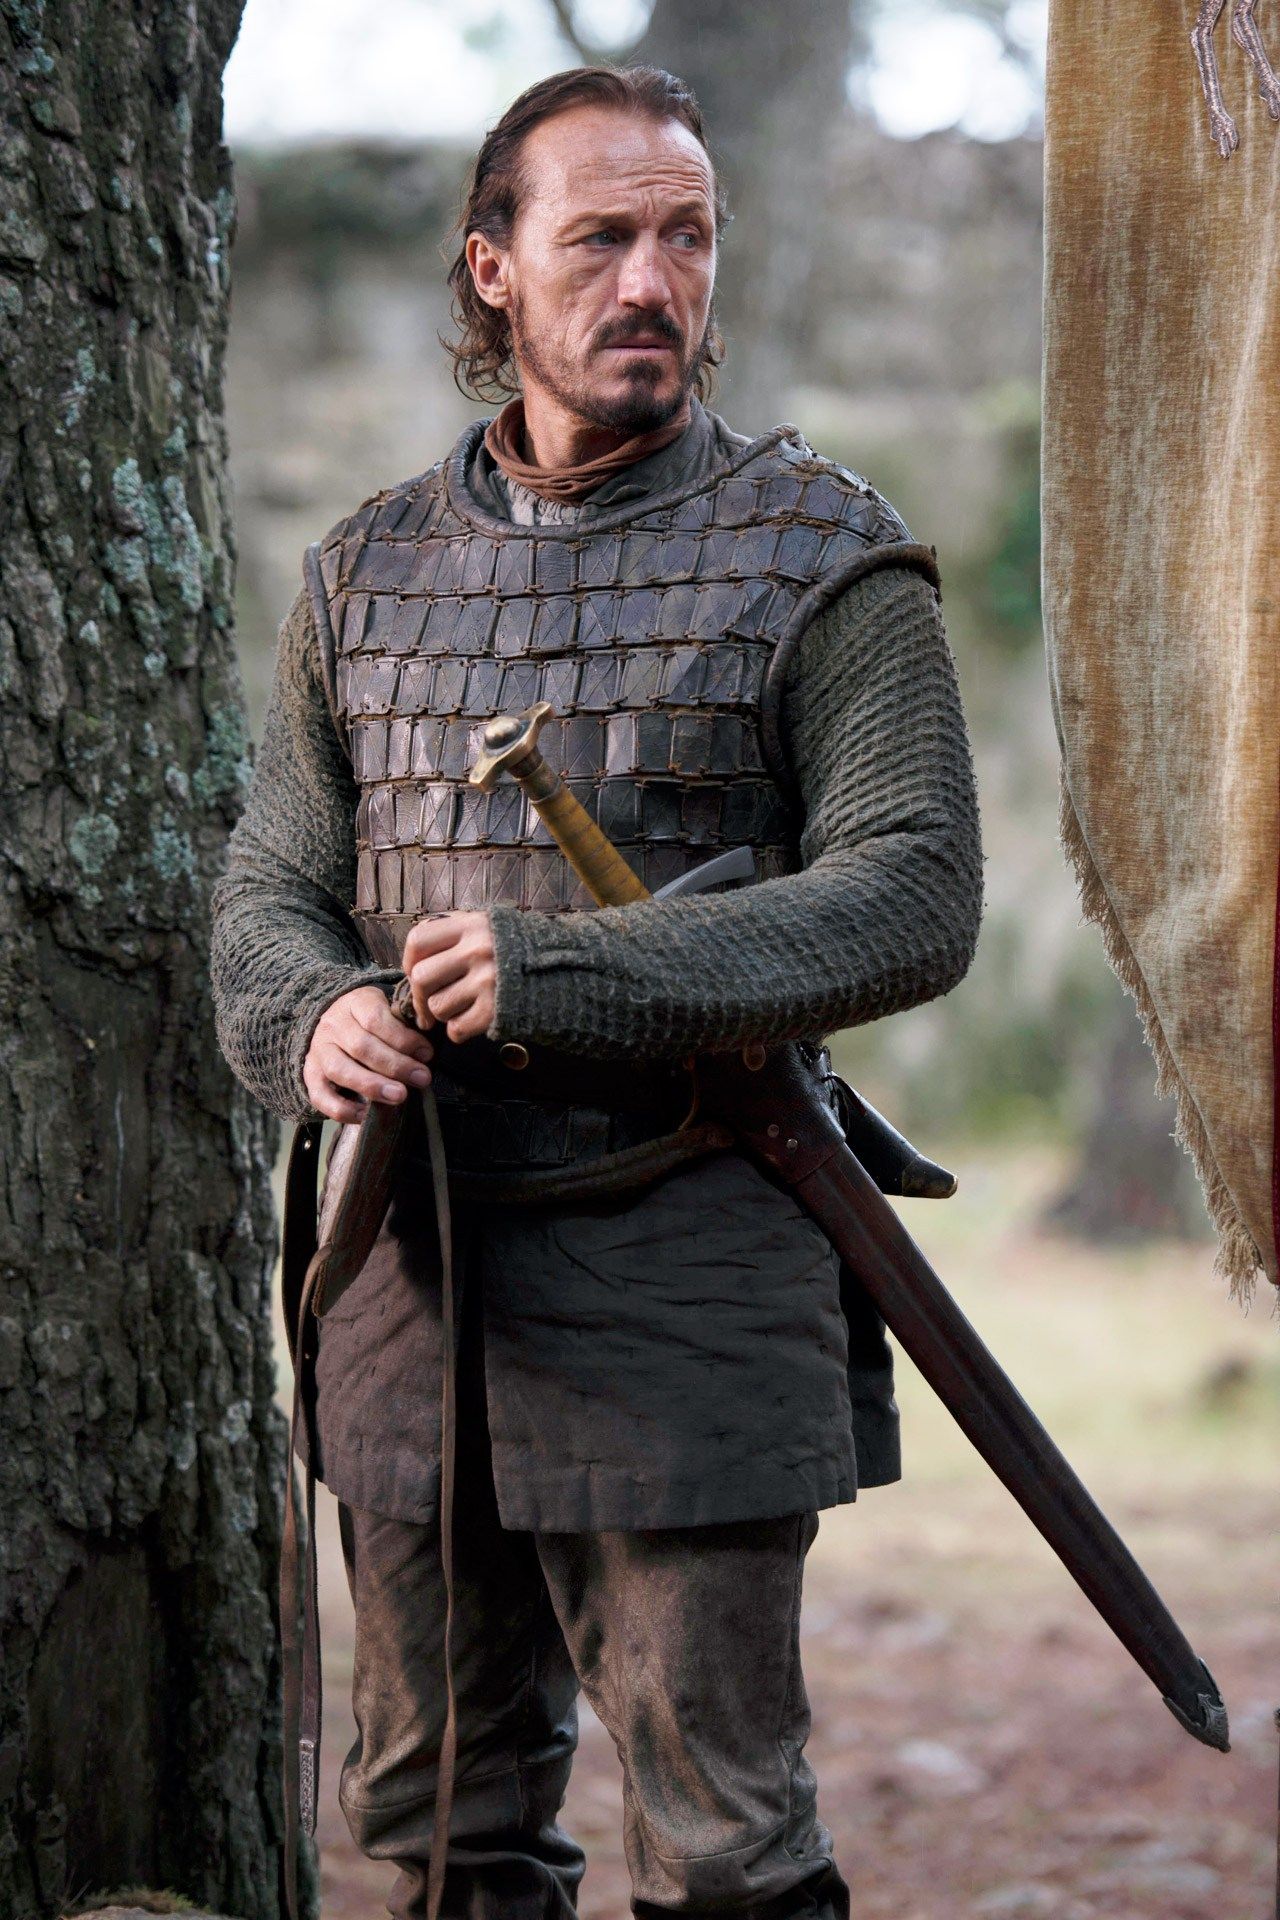 I Heart Thrones. Game of thrones costumes, Bronn game of thrones, Bronn